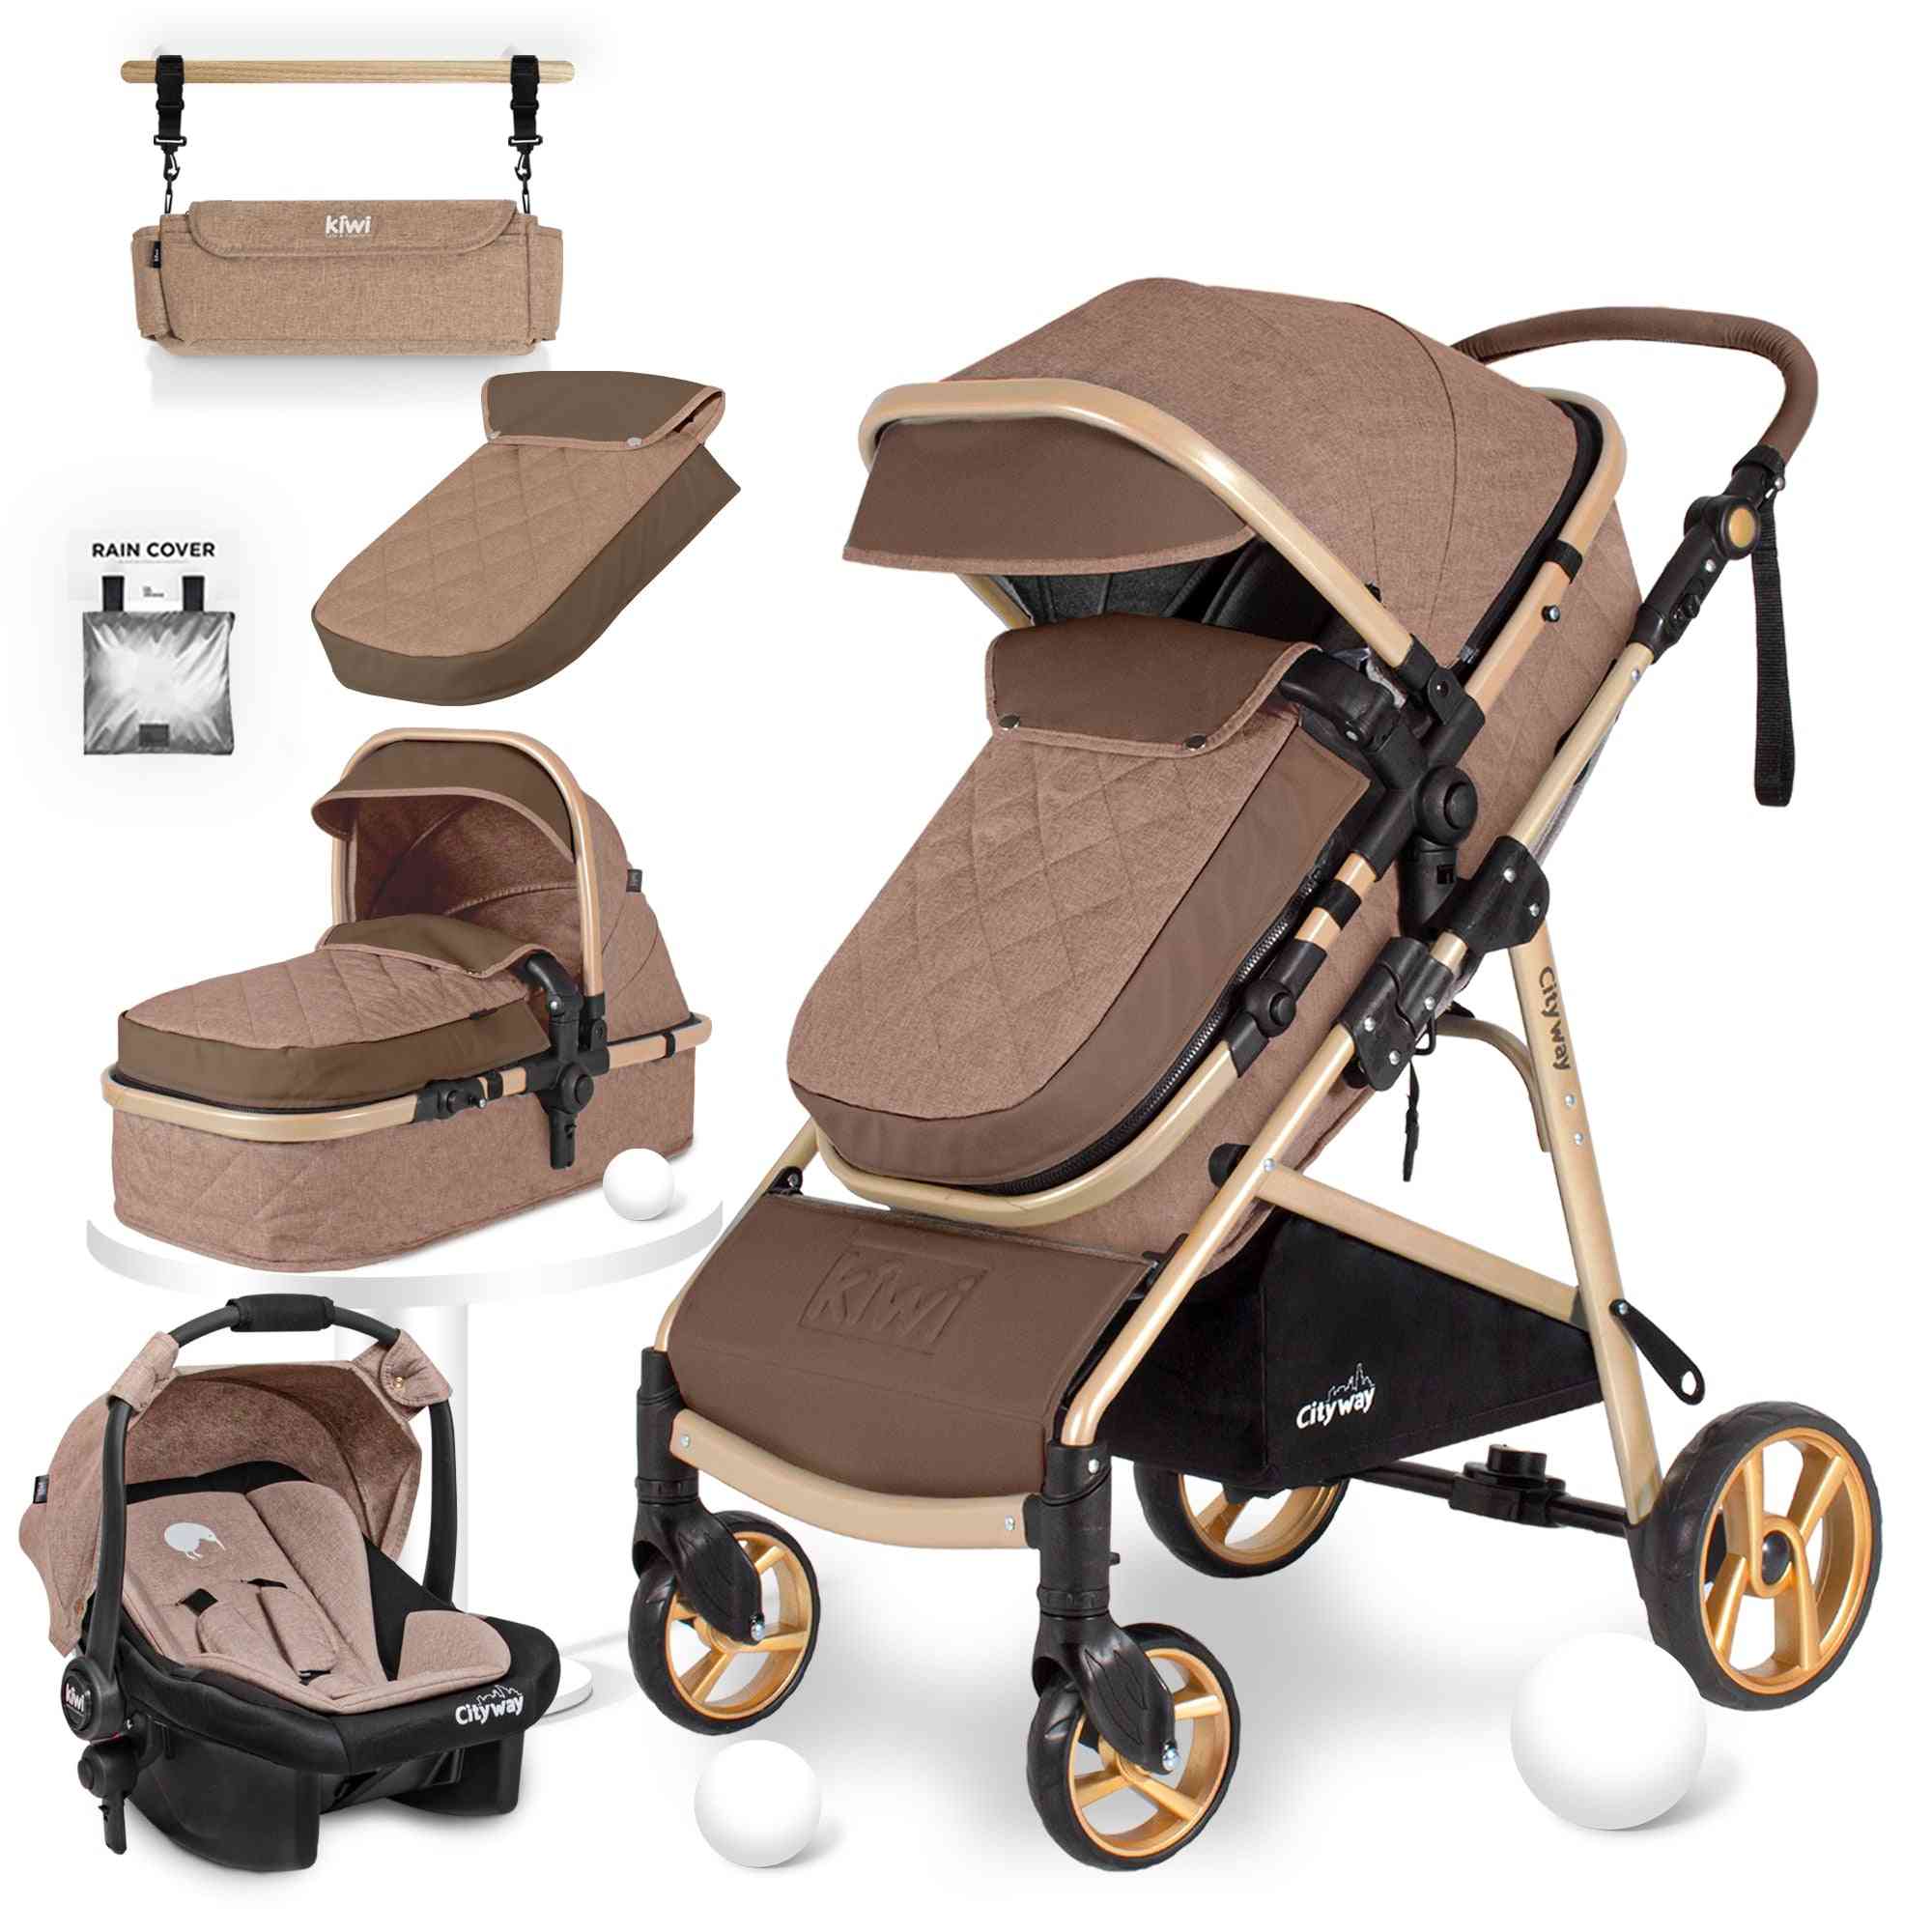 Baby Stroller, Carry Cot, Carrying Seat, Nursing Bag, Raincoat